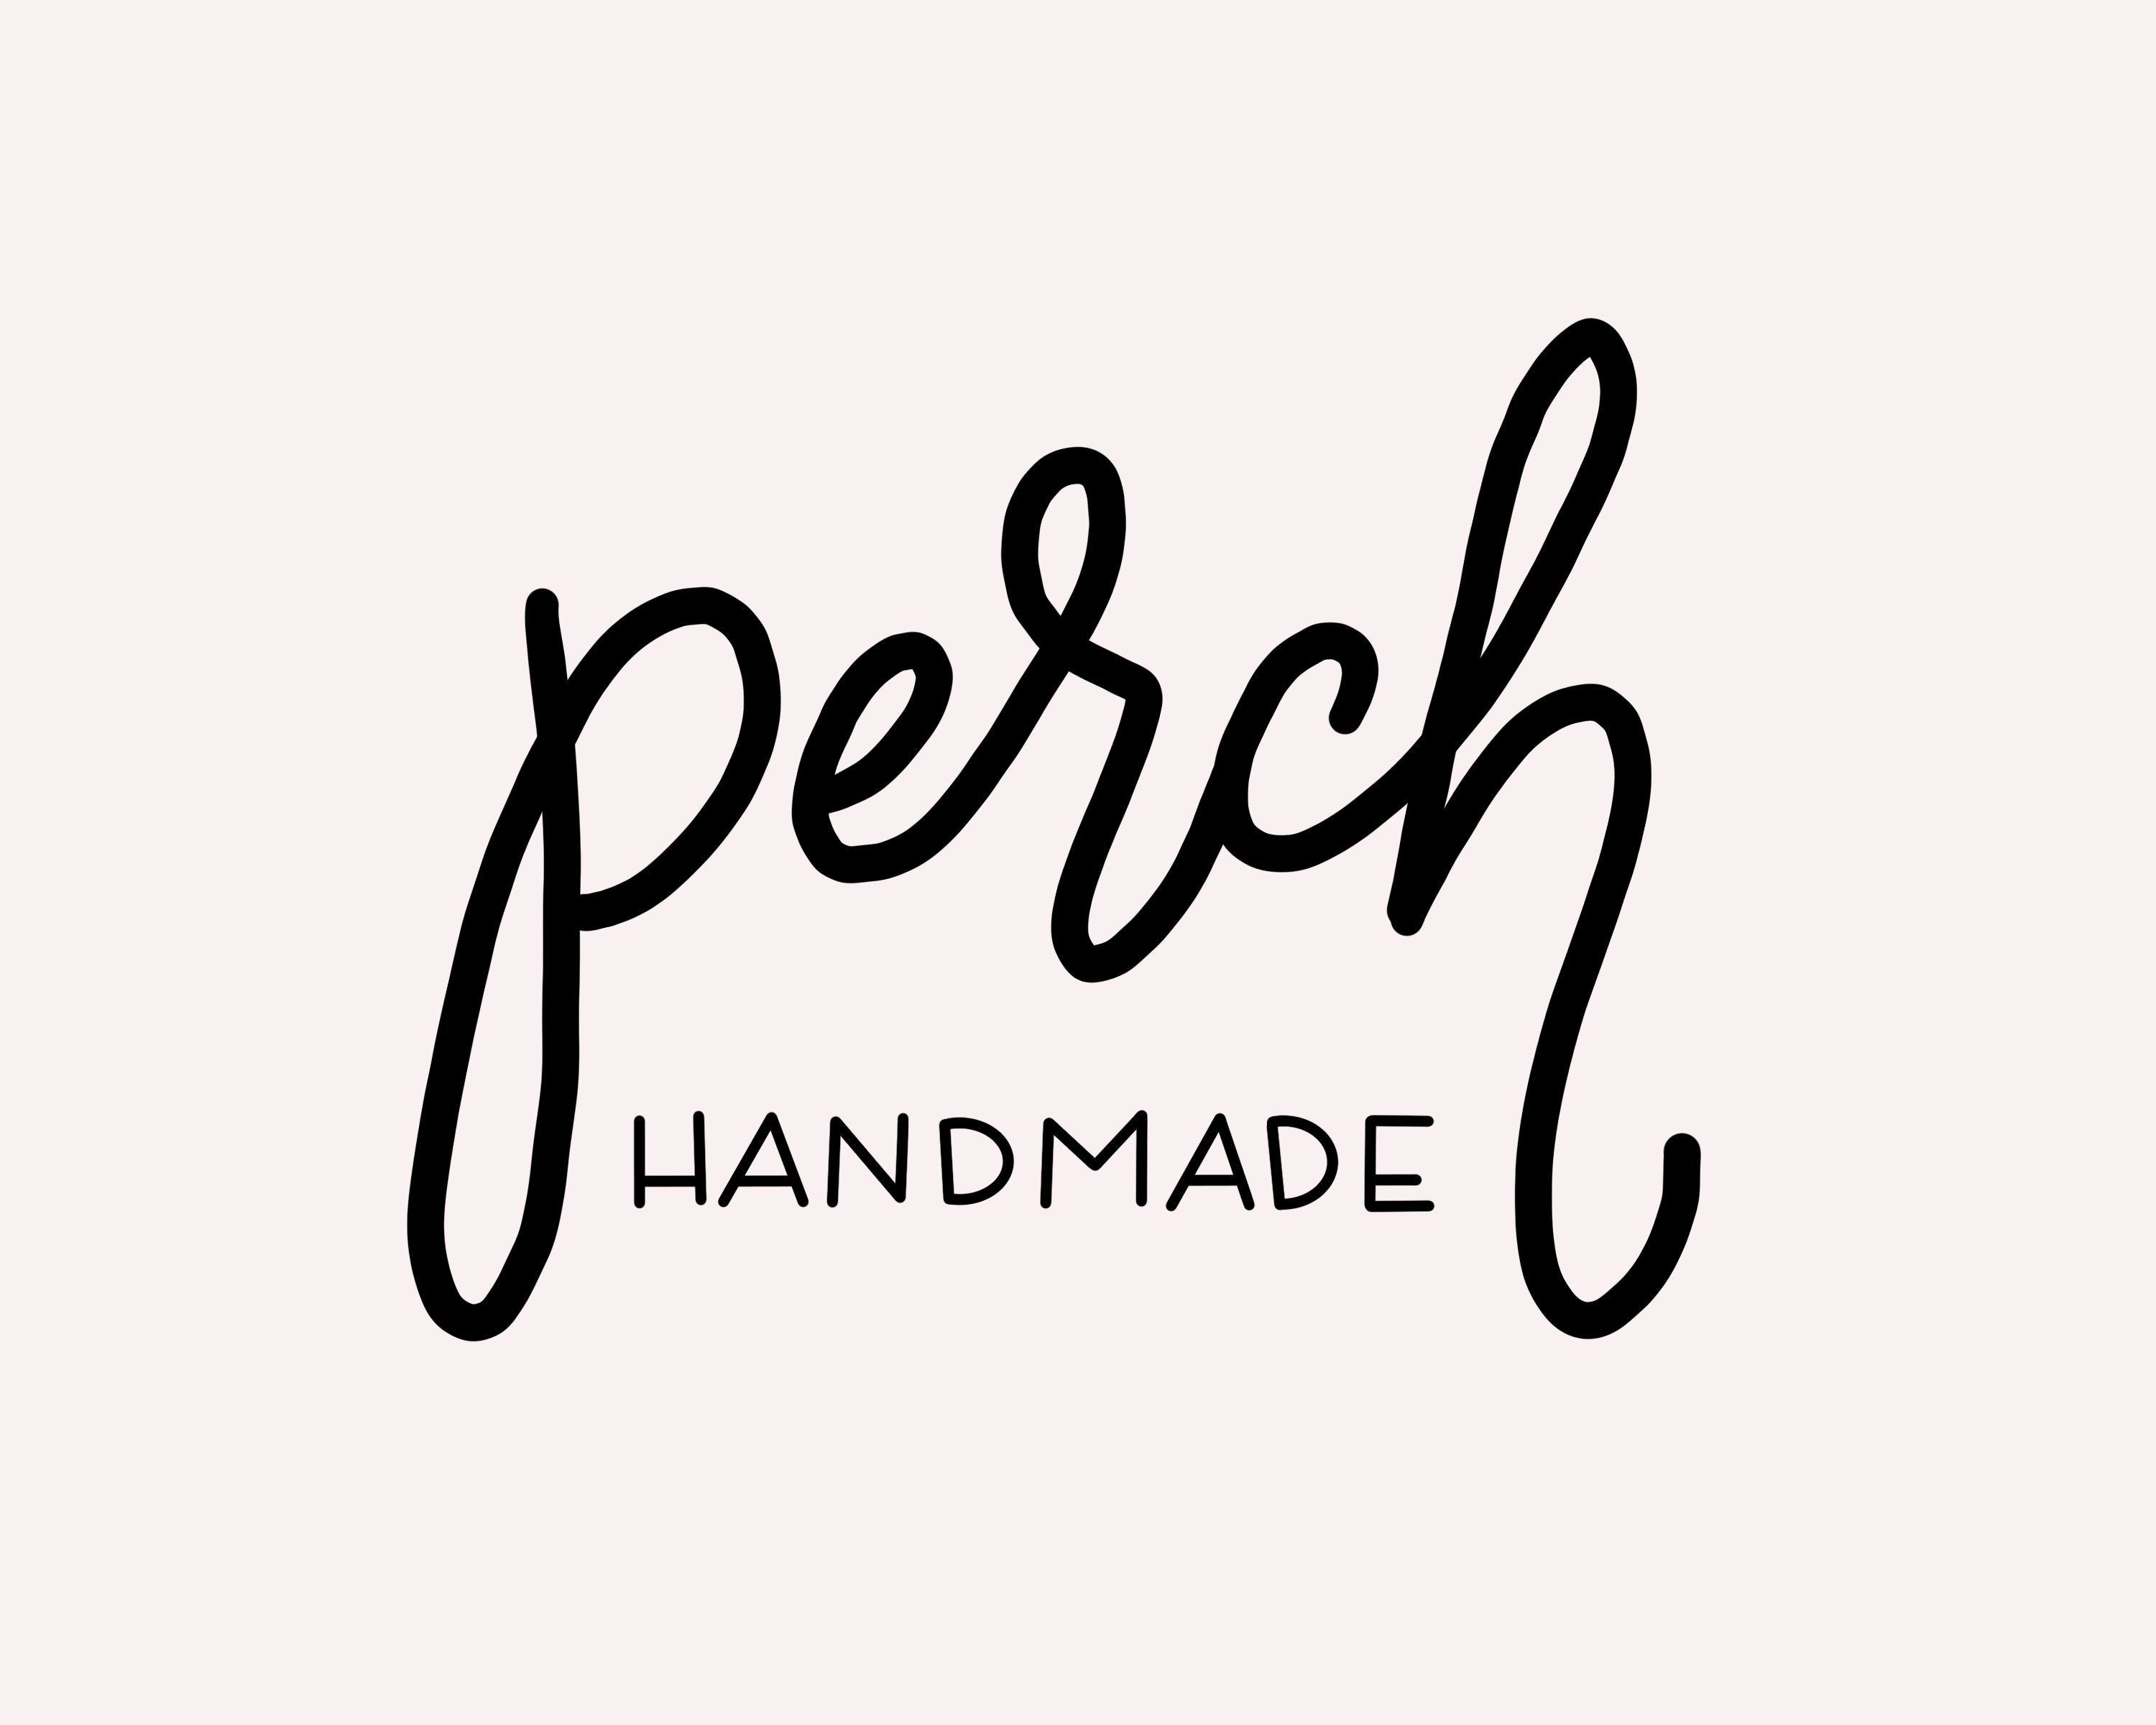 Perch Handmade